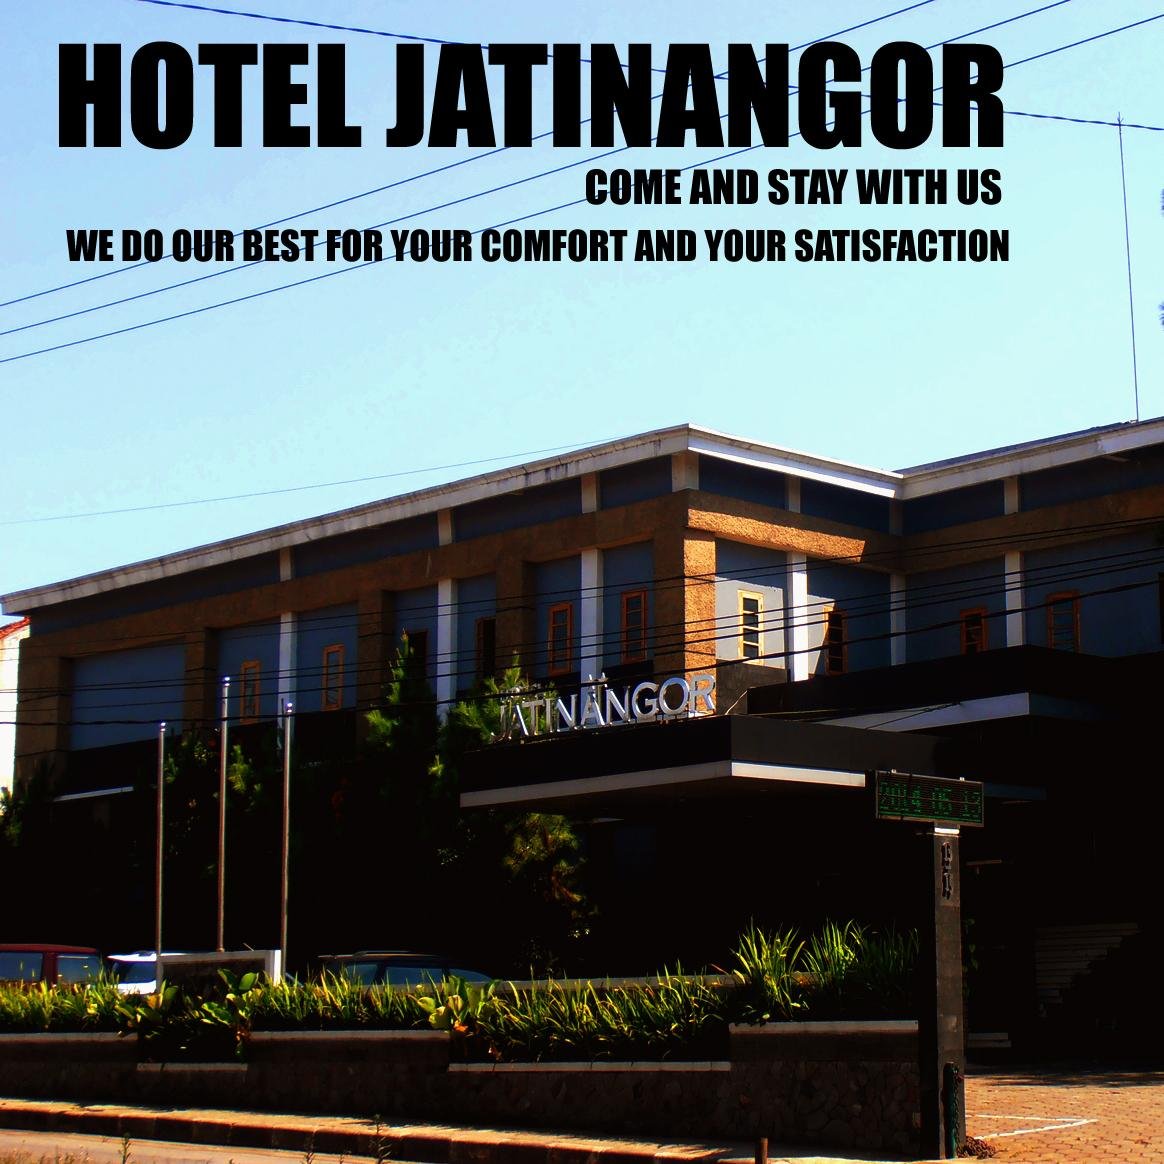 Official Account Of Hotel Jatinangor | Jln. Raya Jatinangor No. 13 - 15, Bandung, Indonesia. | hoteljatinangor@consultant.com |